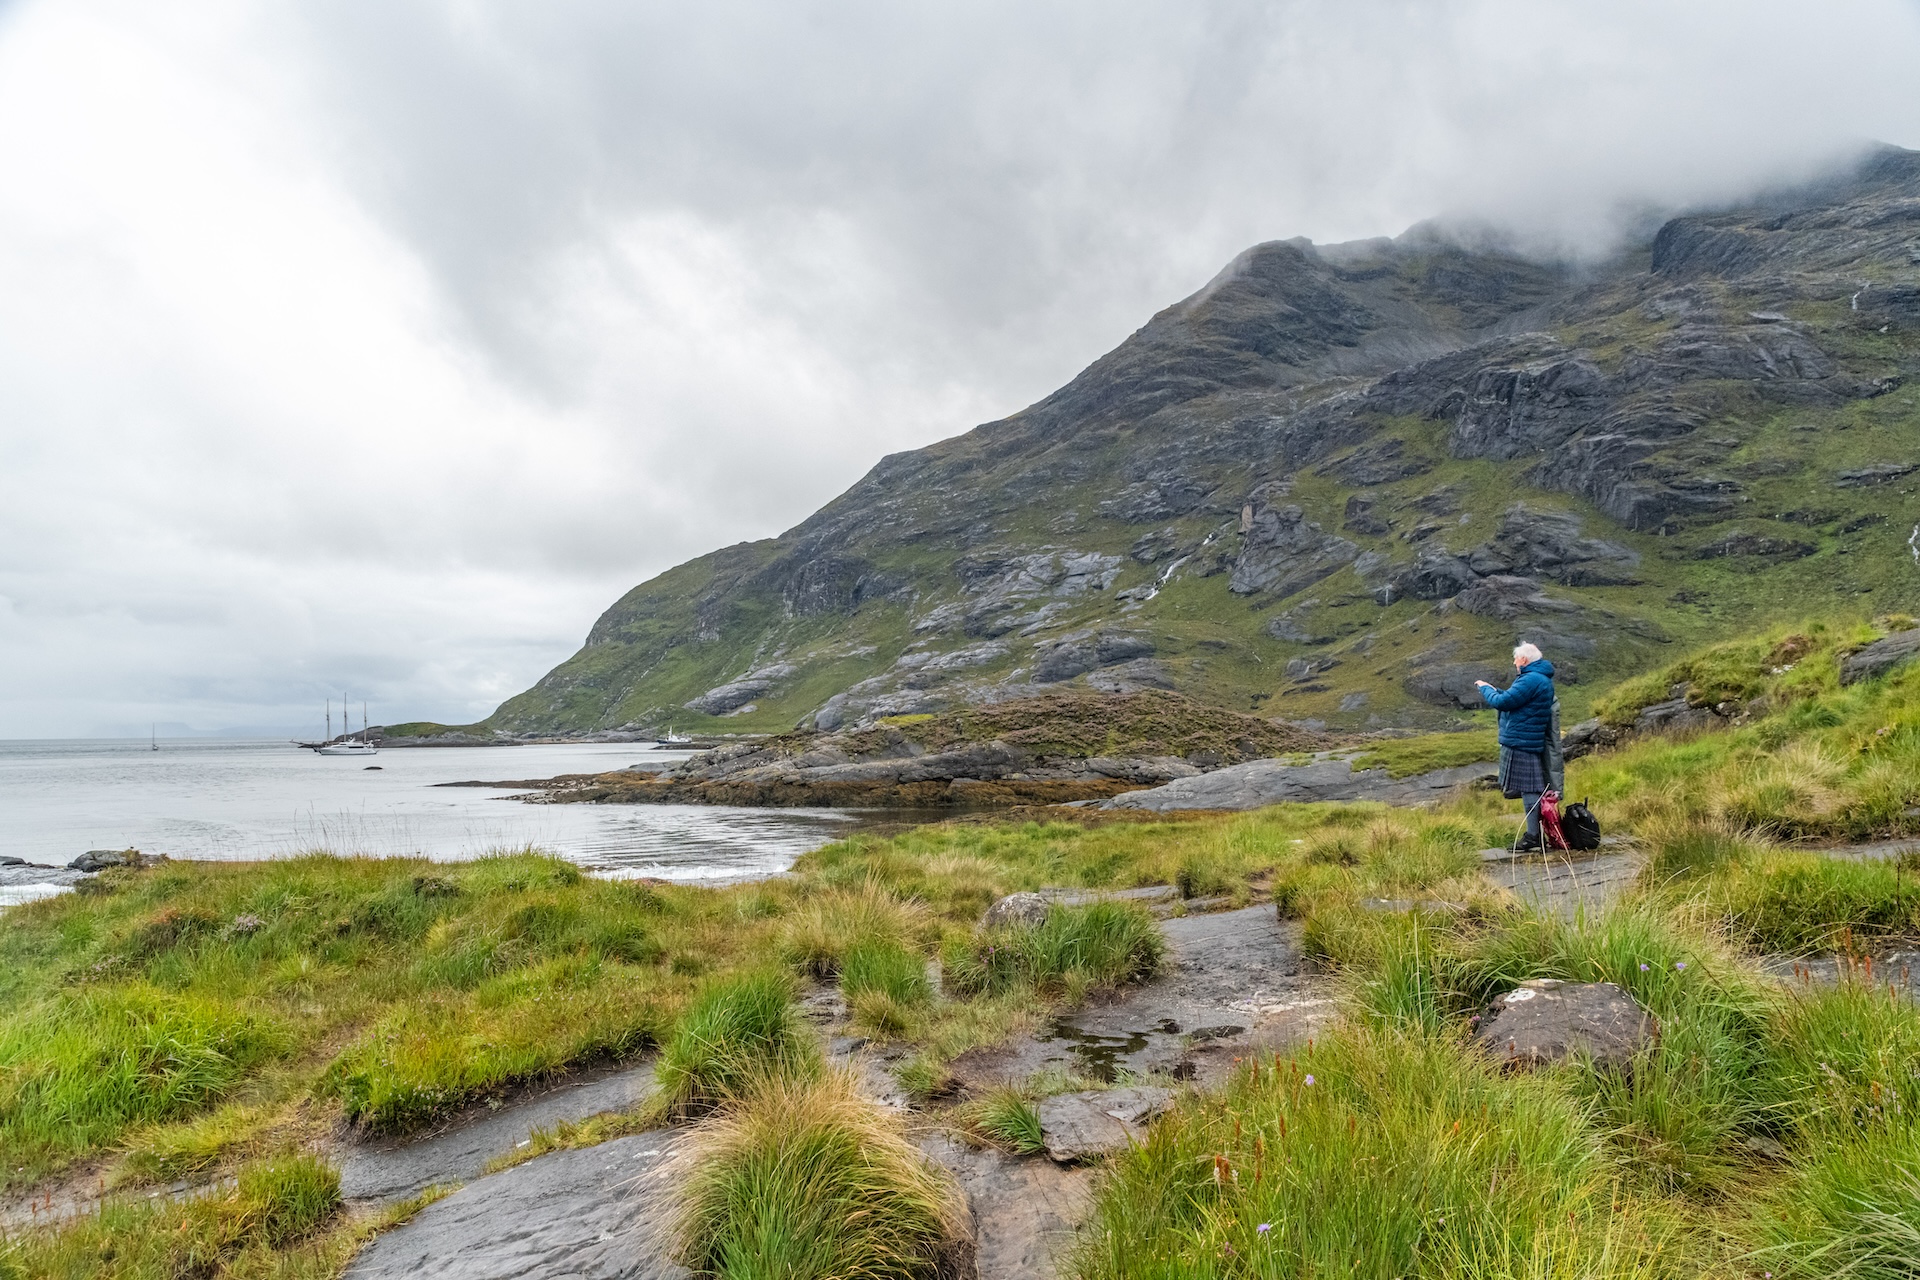 Nick Walton delves into the remote, wild, and unpredictable landscapes of Scotland’s Hebrides archipelago.